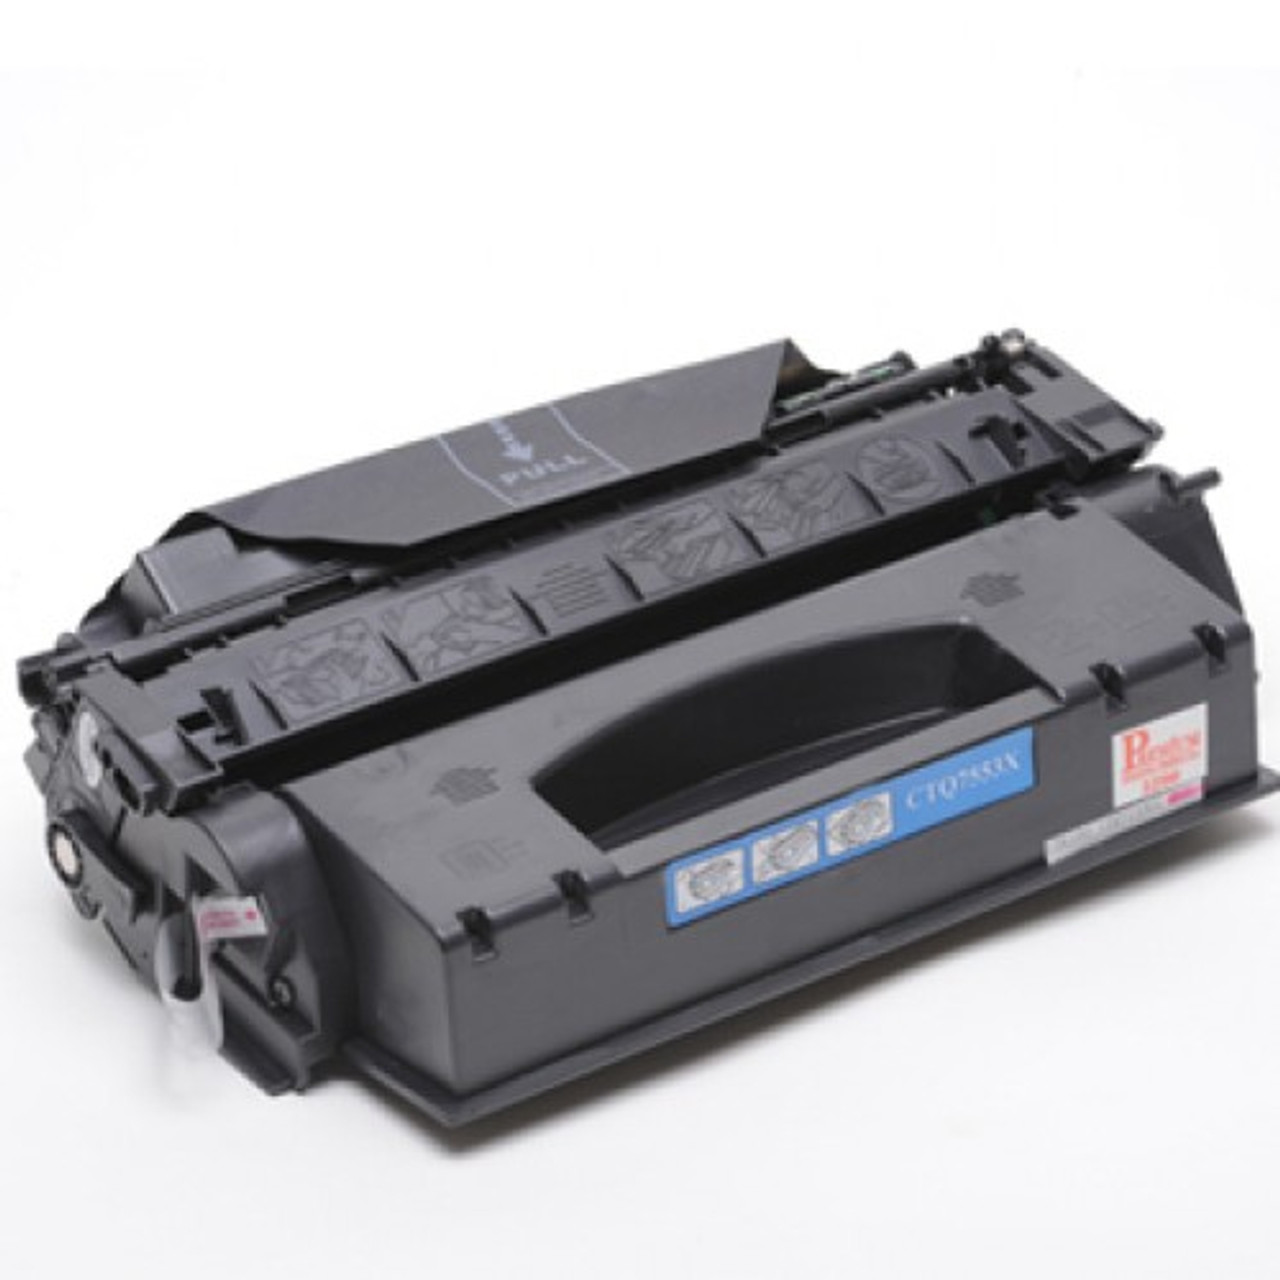 HP P2015 Toner Cartridge - Compatible